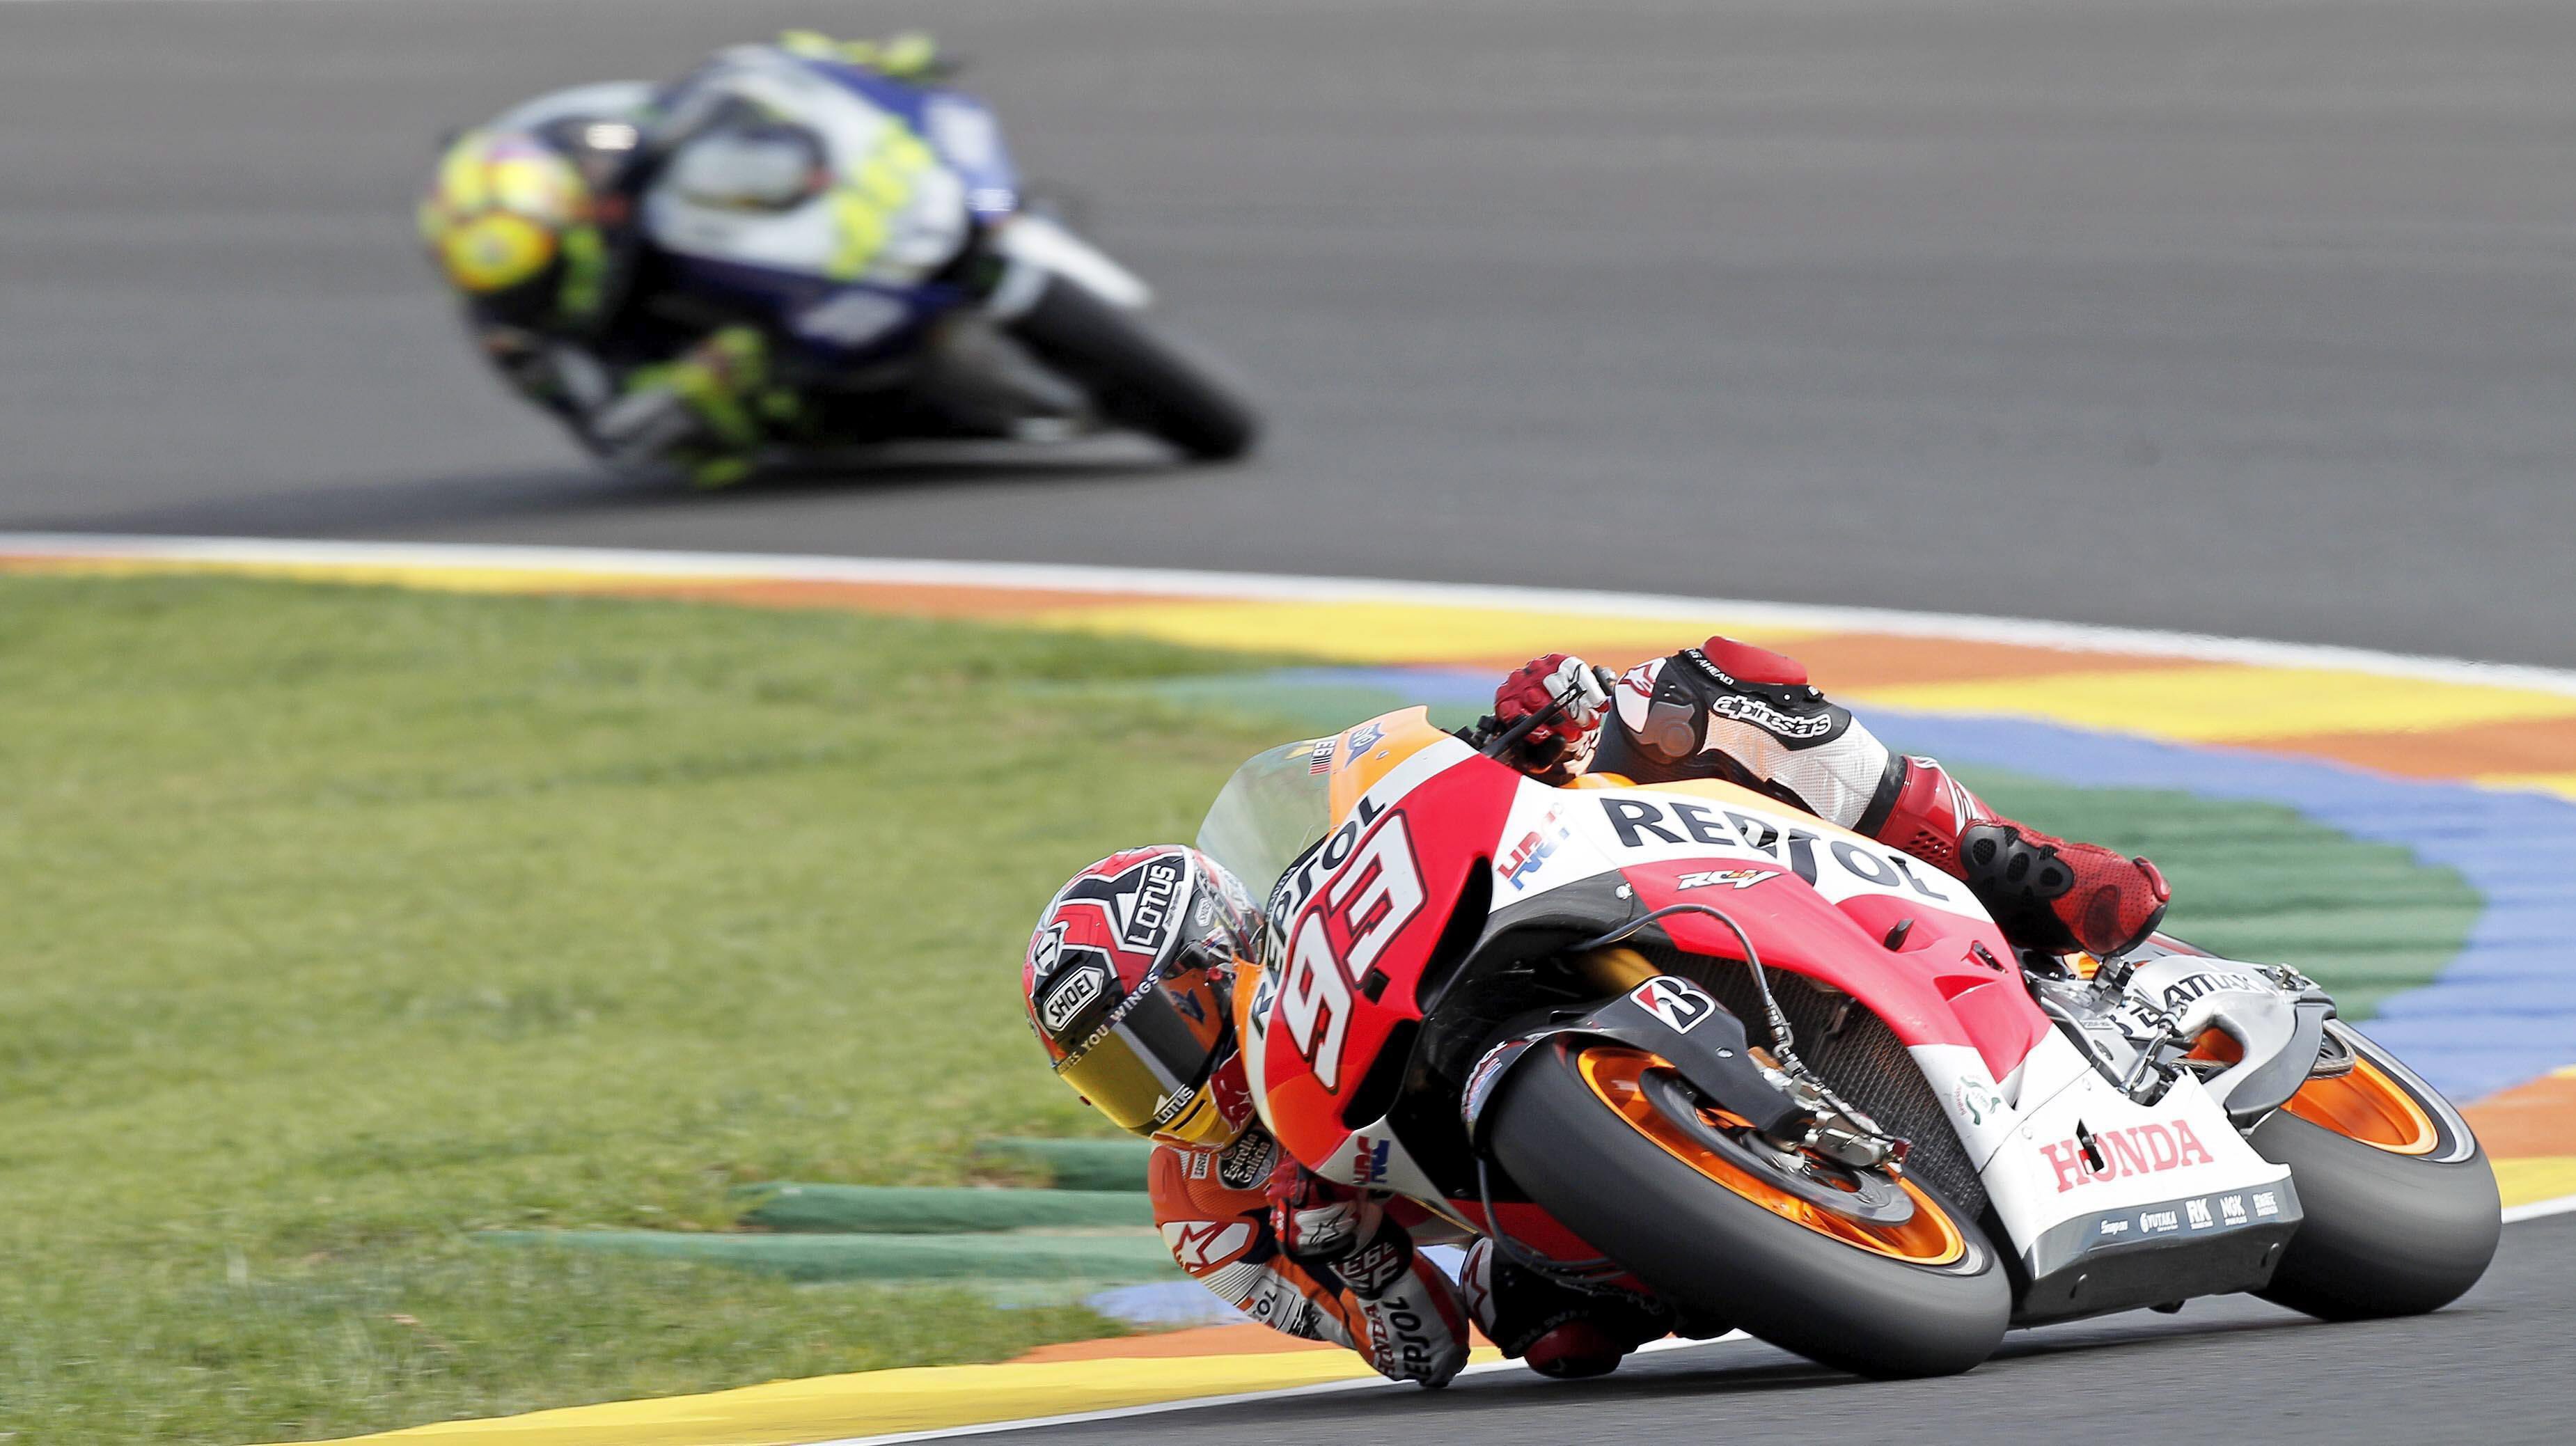 MotoGP - Valencia 2013: Με ρεκόρ πίστας τελείωσε τις ελεύθερες δοκιμές ο M. Marquez